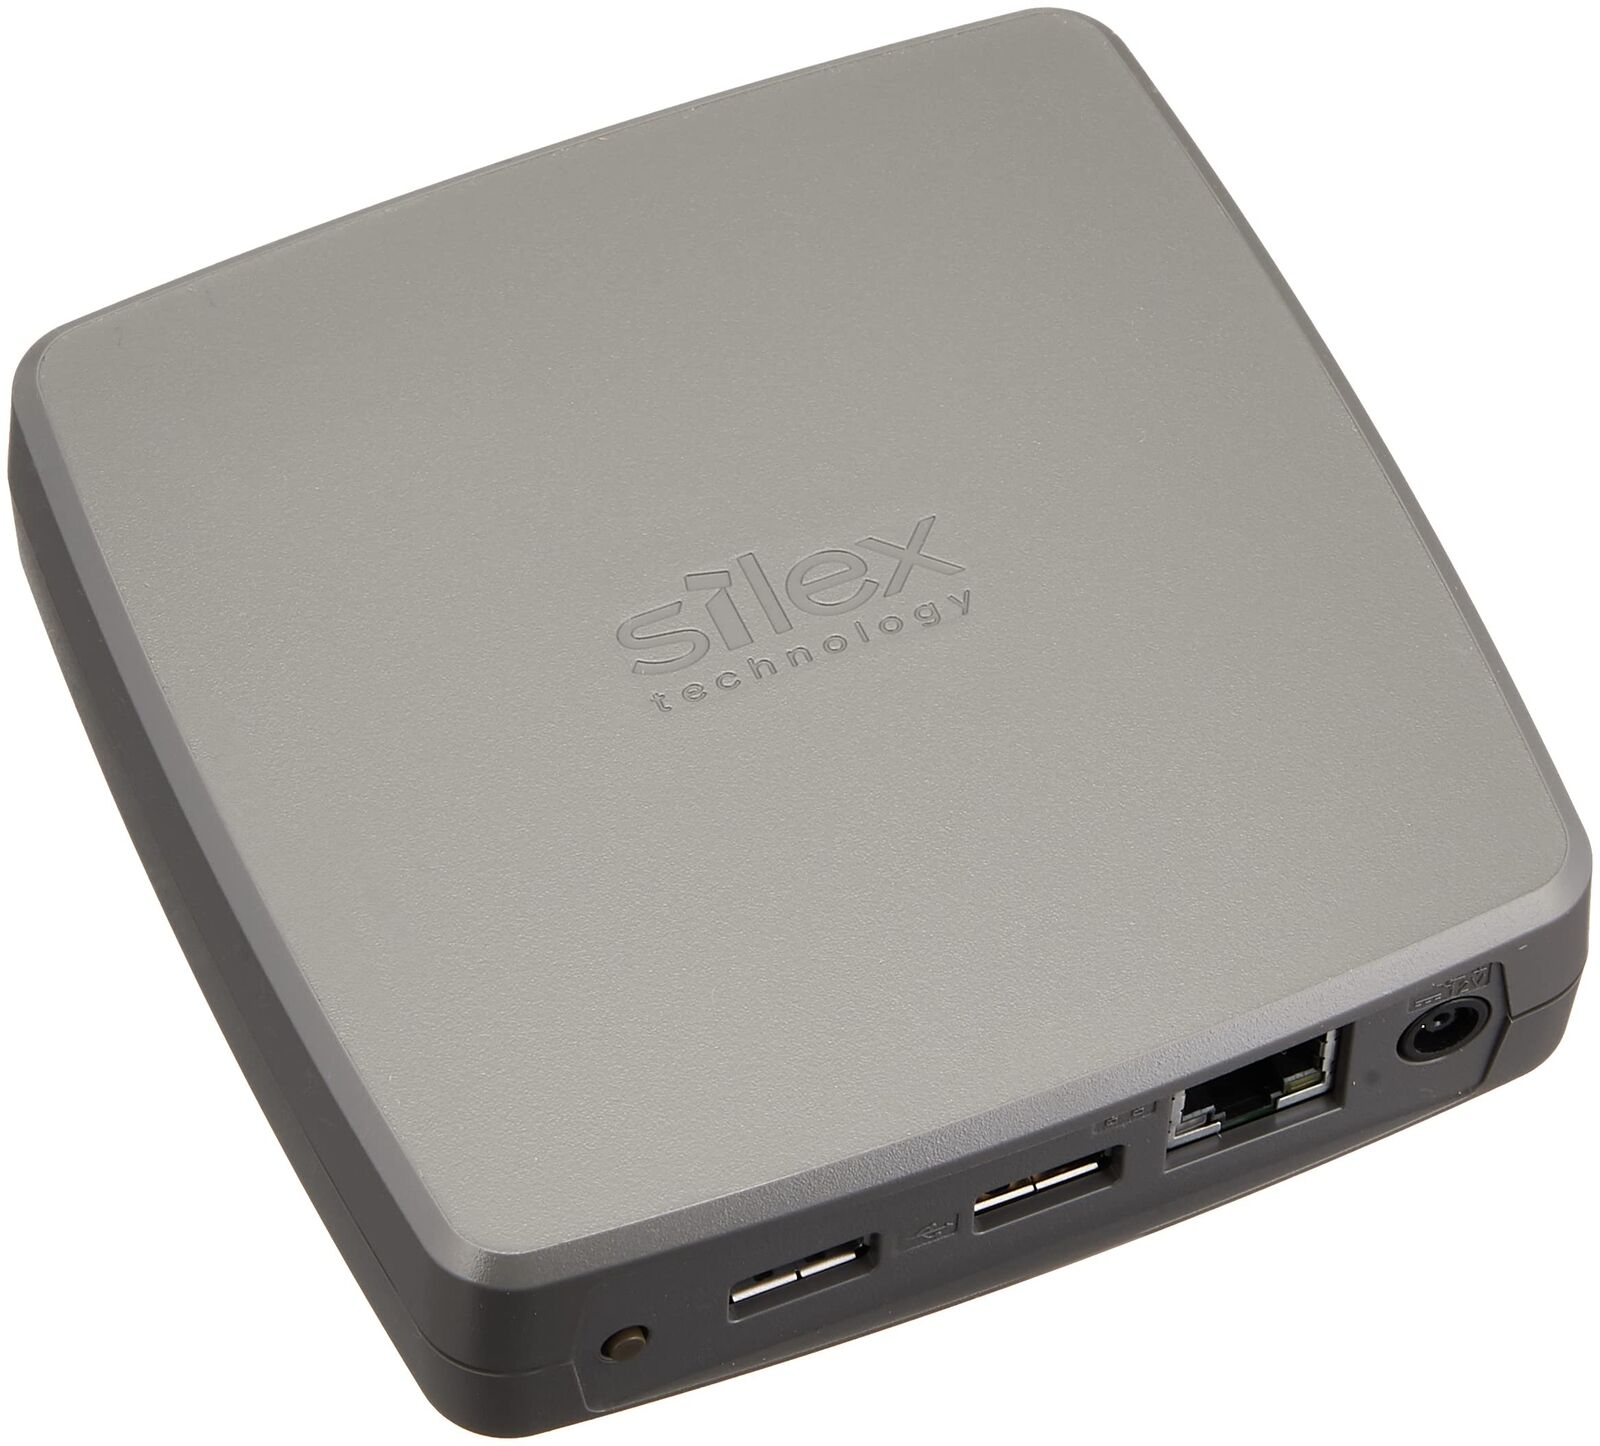 Silex Technology USB Device Server 0.74pound Multicolor Silver